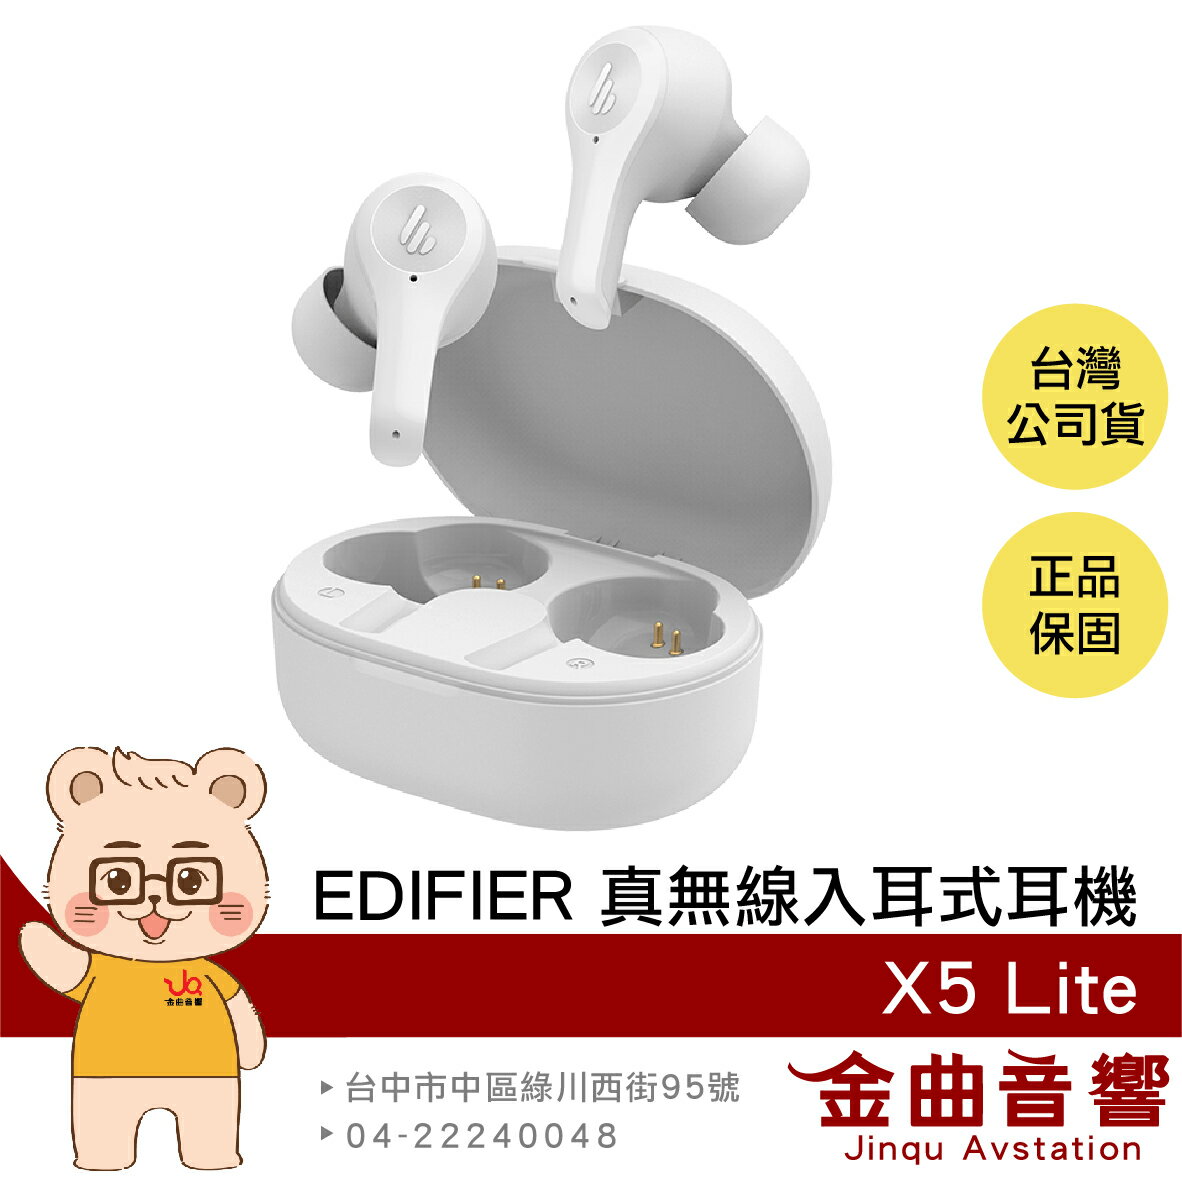 EDIFIER 漫步者 X5 Lite 白色 通話降噪 低延遲 IP55防塵防水 真無線 入耳式 耳機 | 金曲音響